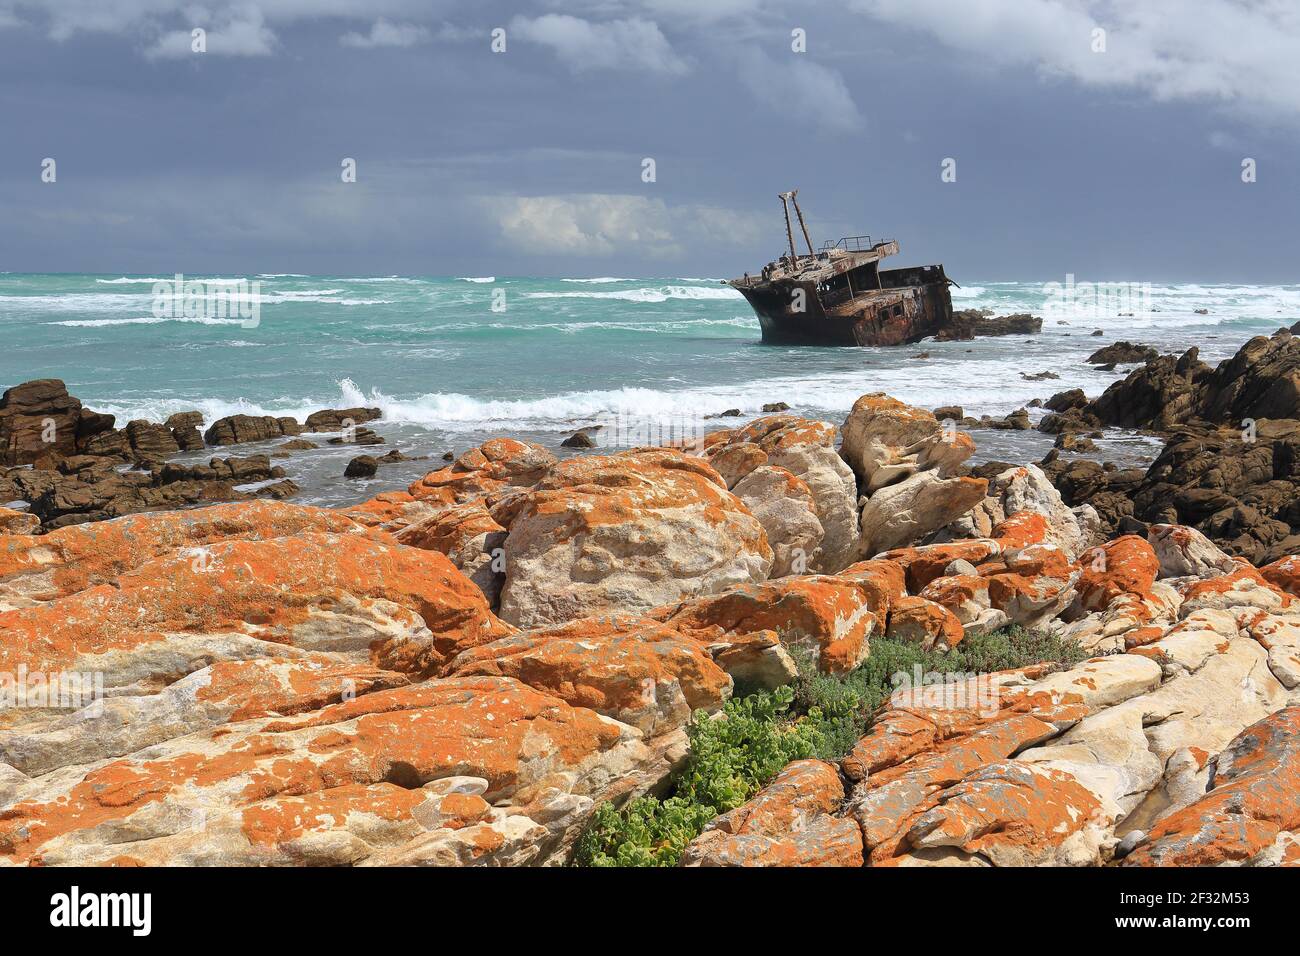 Shipwreck, Cape Agulhas, Western Cape, South Africa Stock Photo